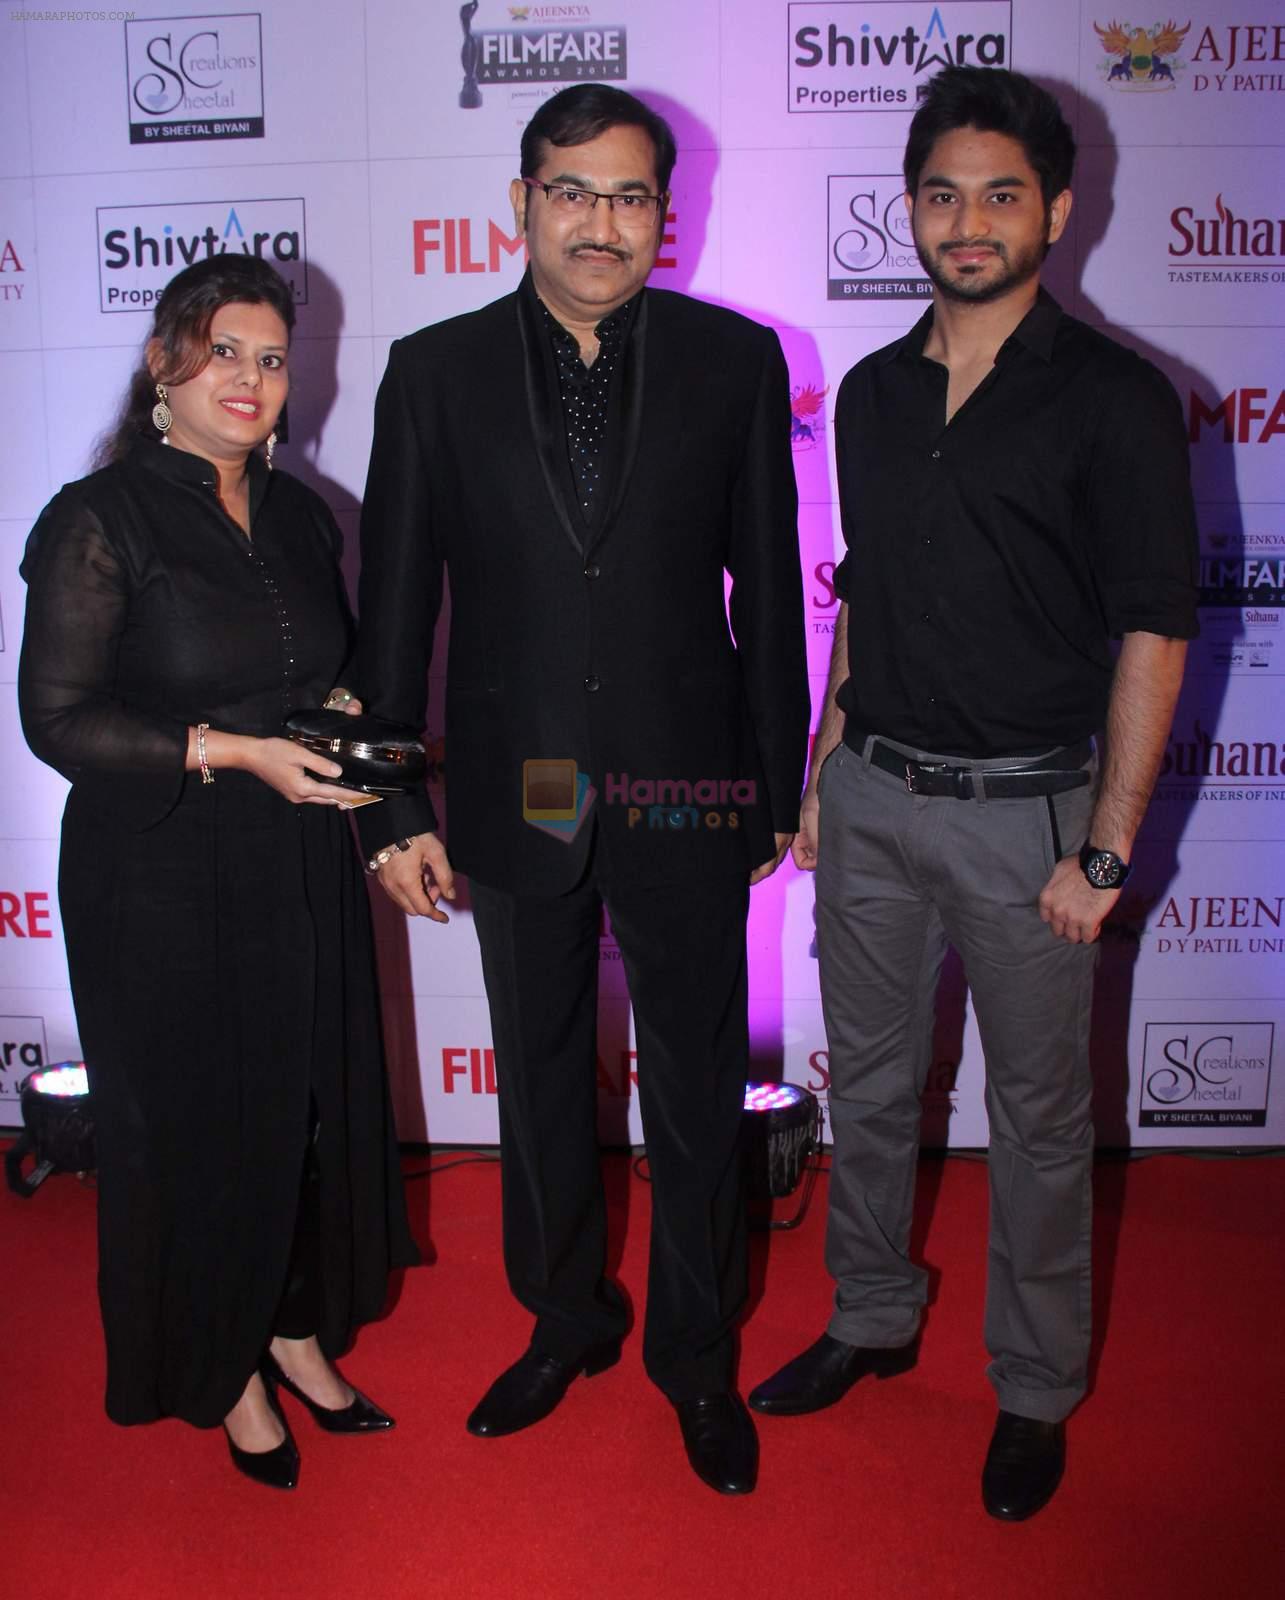 Sudesh Bhosle at the Red Carpet of _Ajeenkya DY Patil University Filmfare Awards